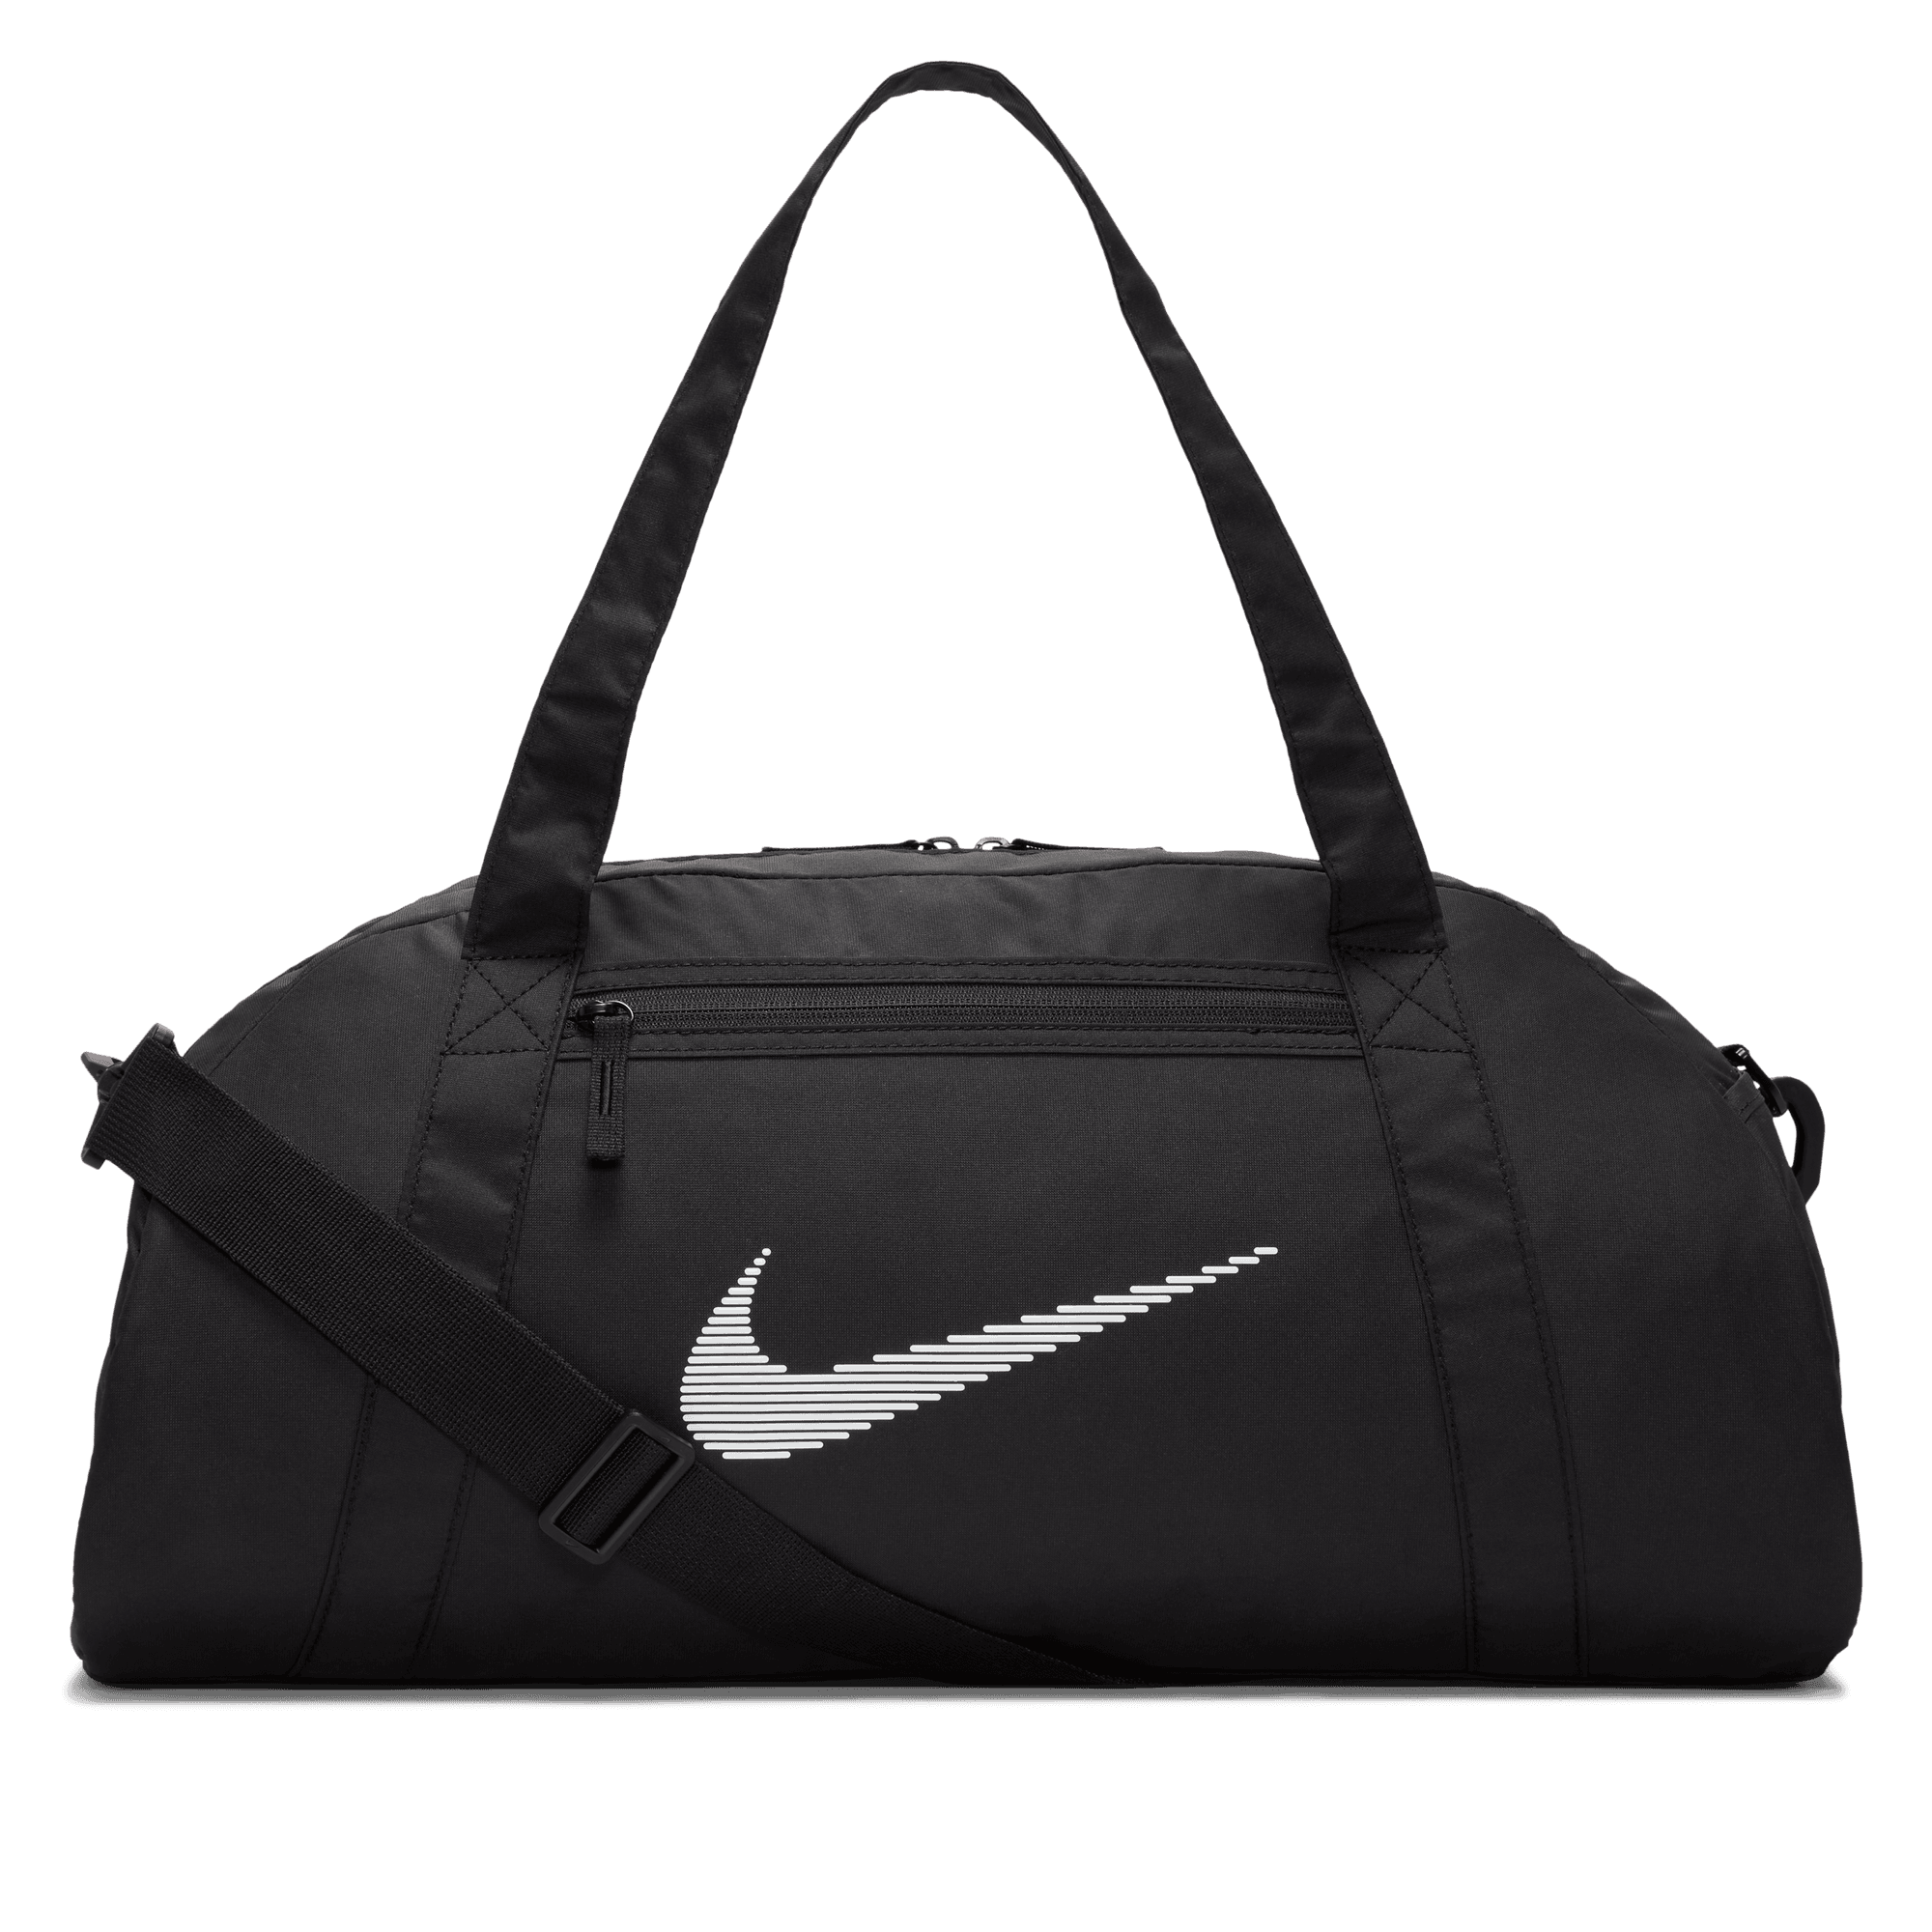 Women's Gym Club Duffel Bag (24L) from Nike